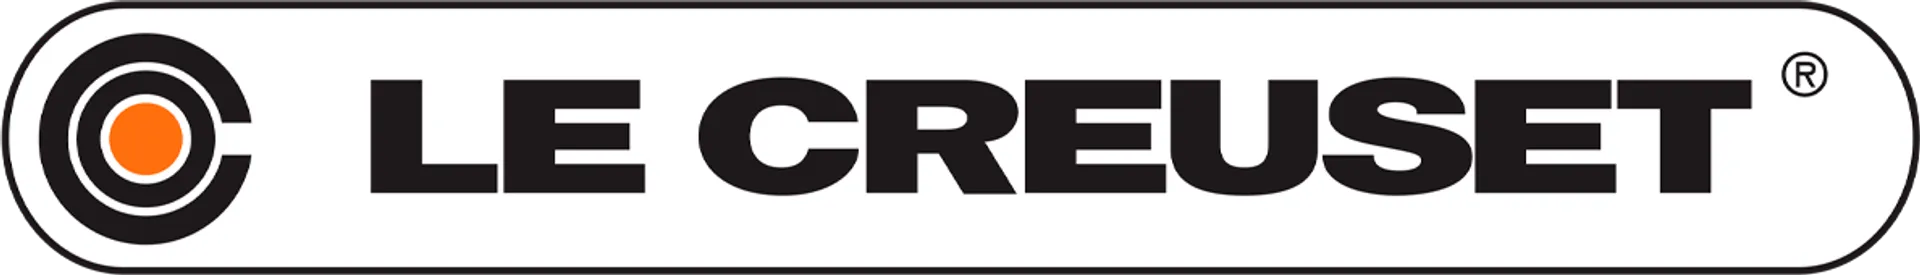 LE CREUSET logo